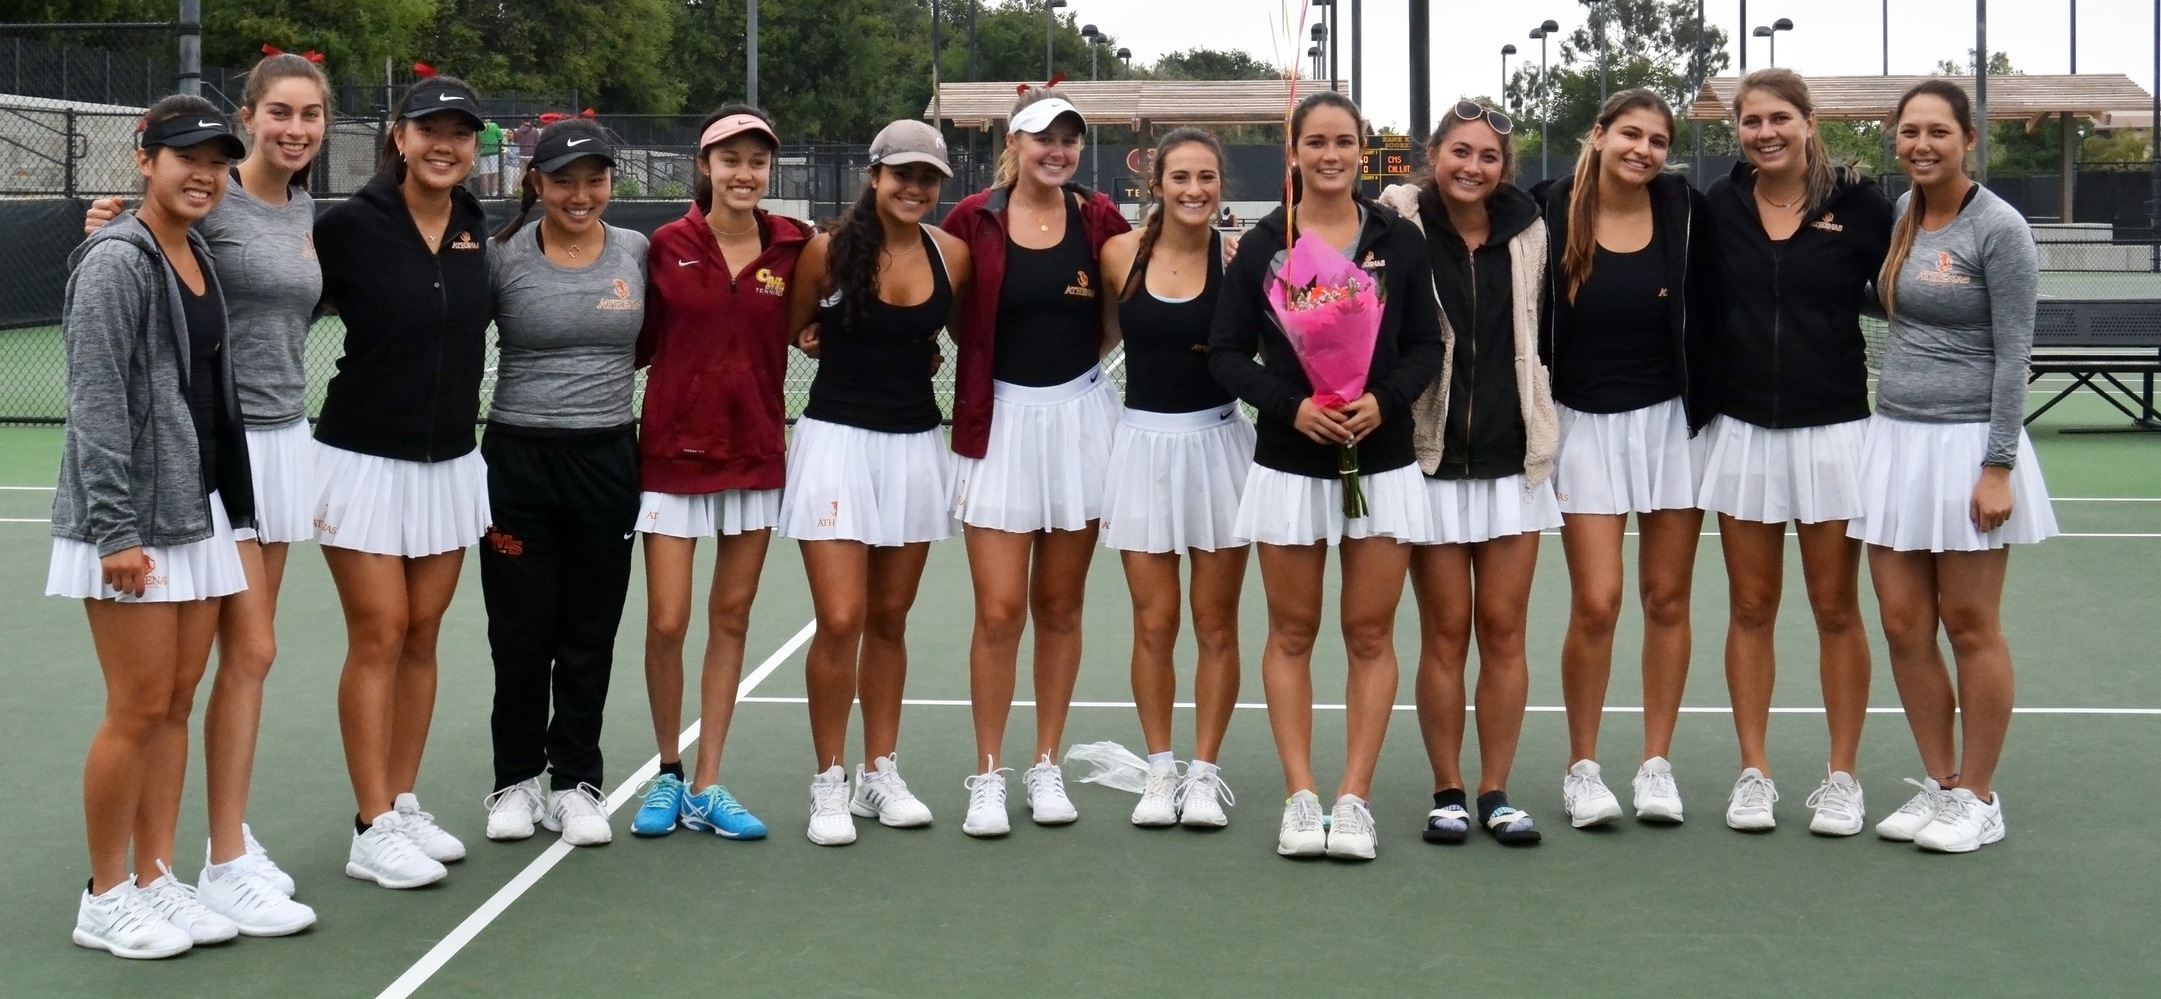 The CMS women's tennis team honored its lone senior, Jessie Cruz, prior to the match